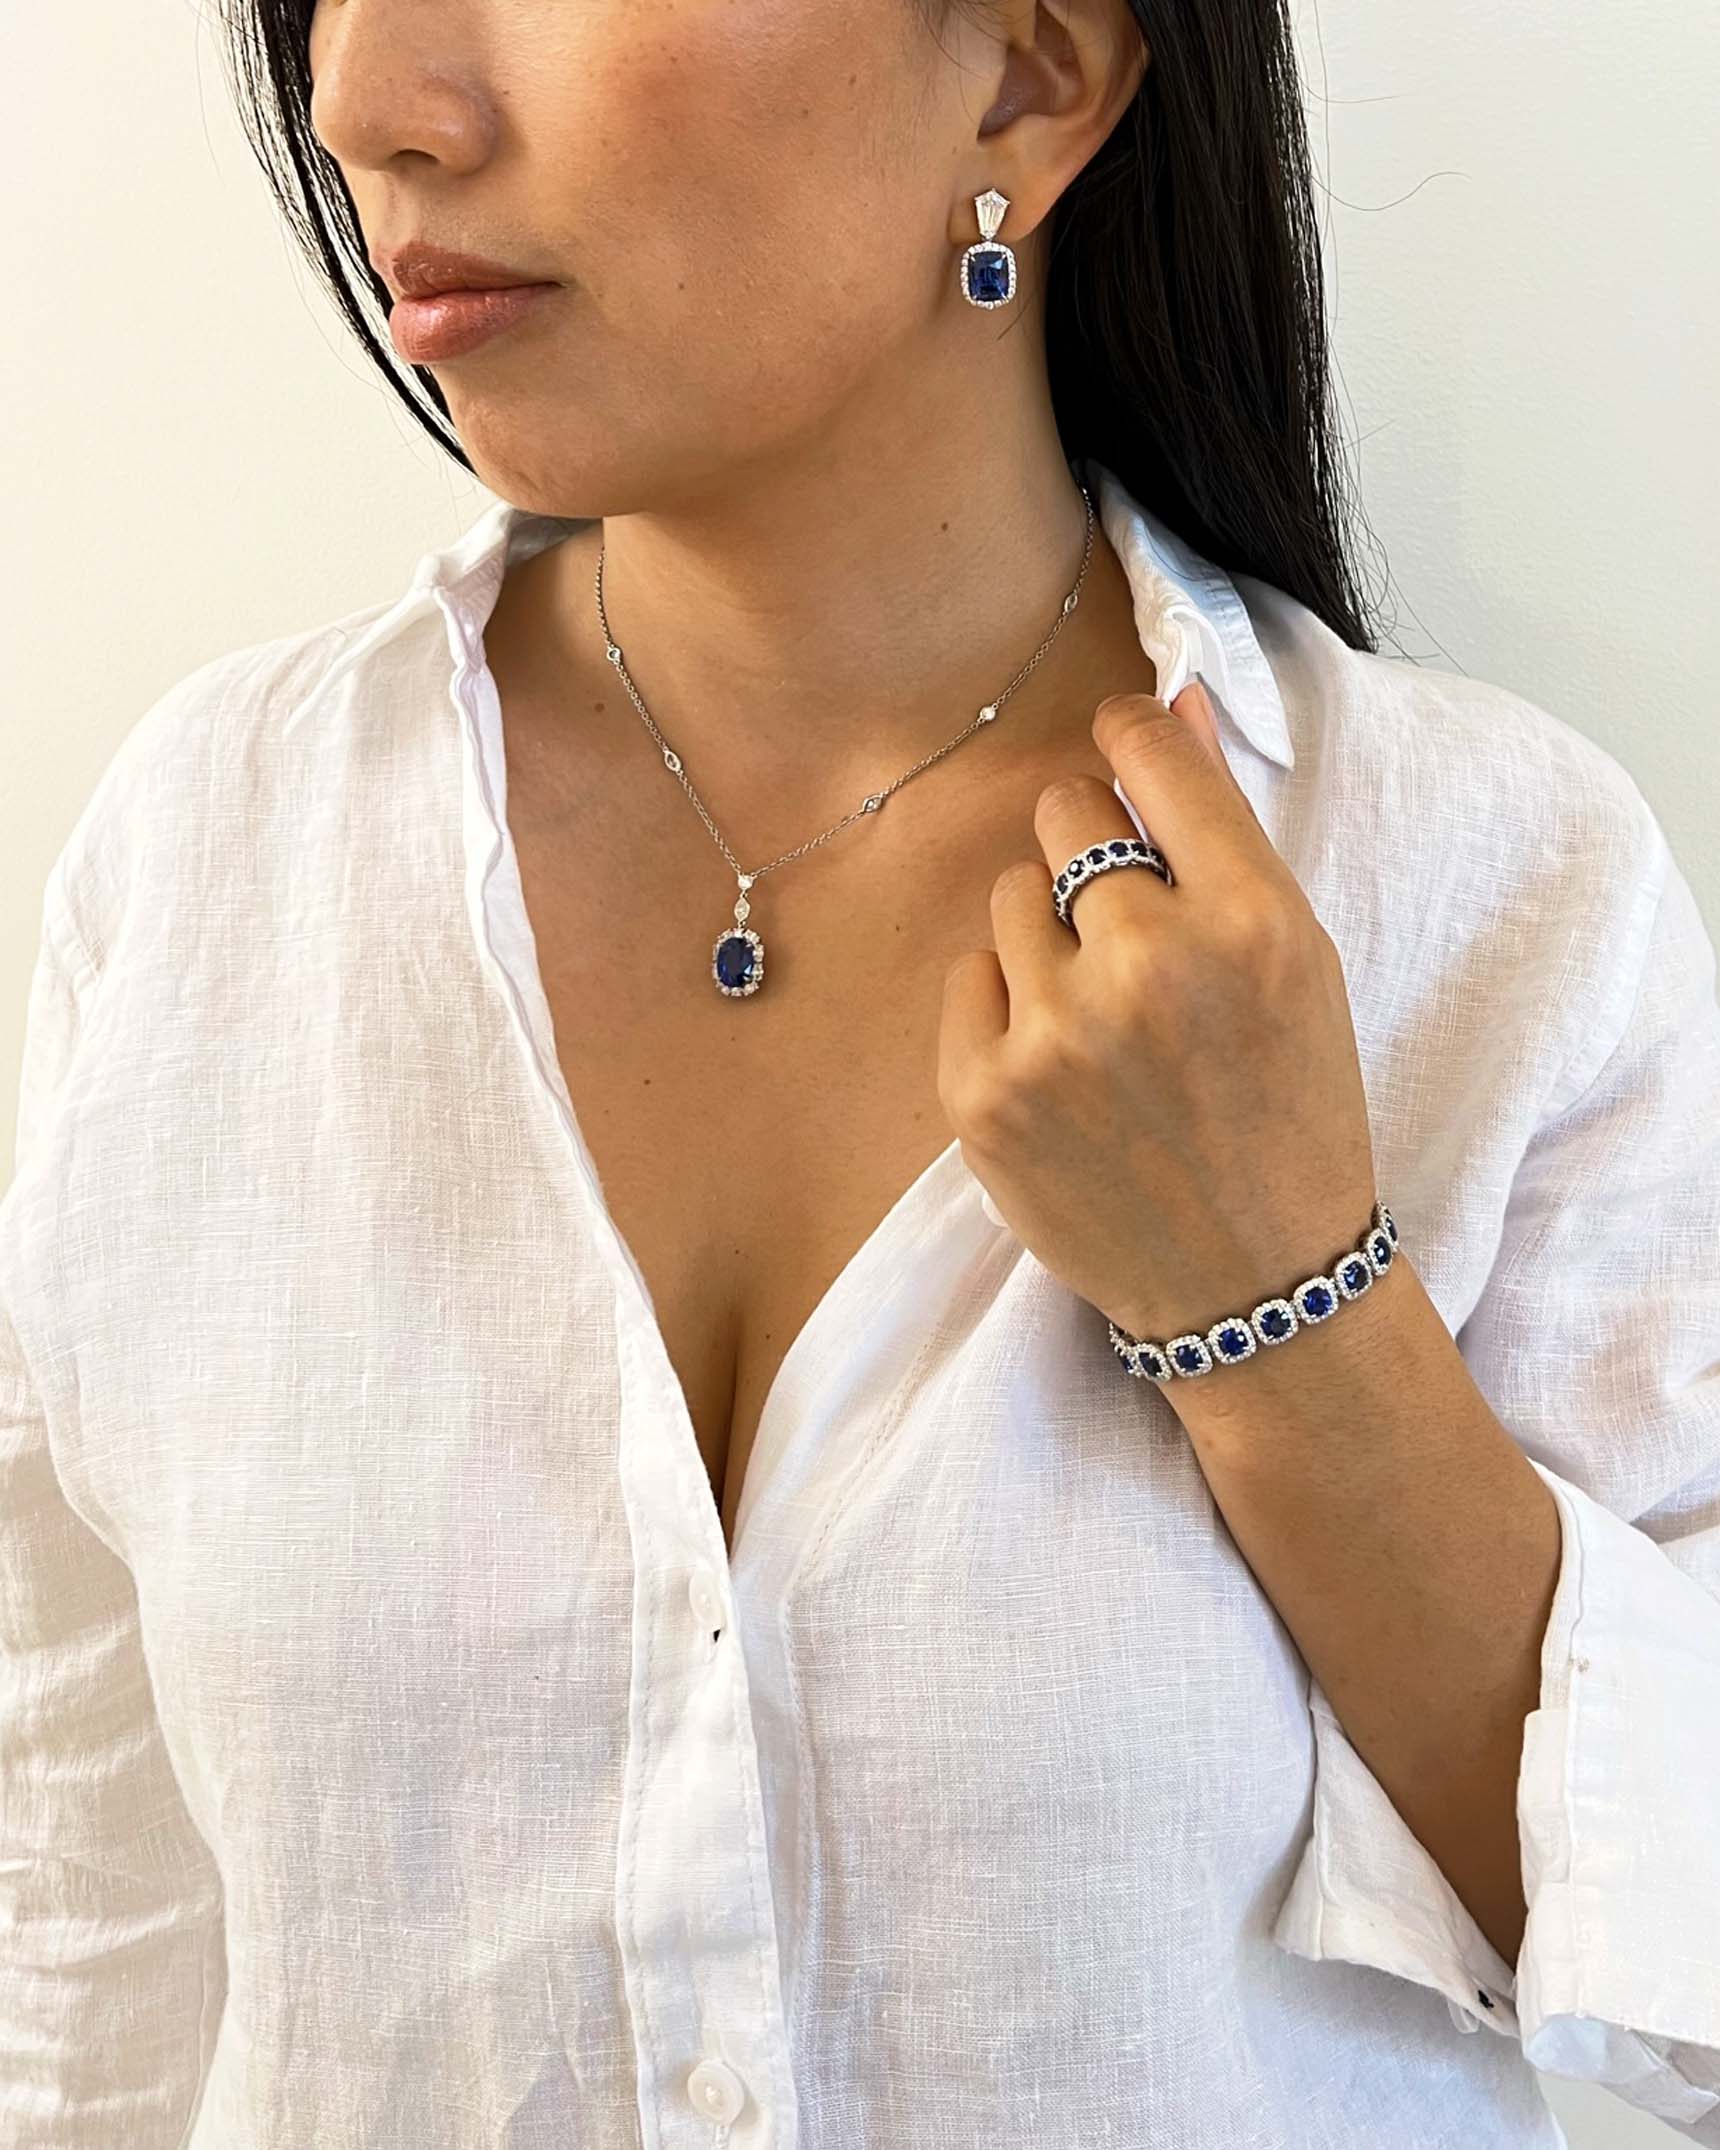 Blue Sapphire and Diamond Earrings_Necklace_Ring and Bracelet ECDKK02482 – PNMTG02936 – RACDS00810 – BCDKK02286